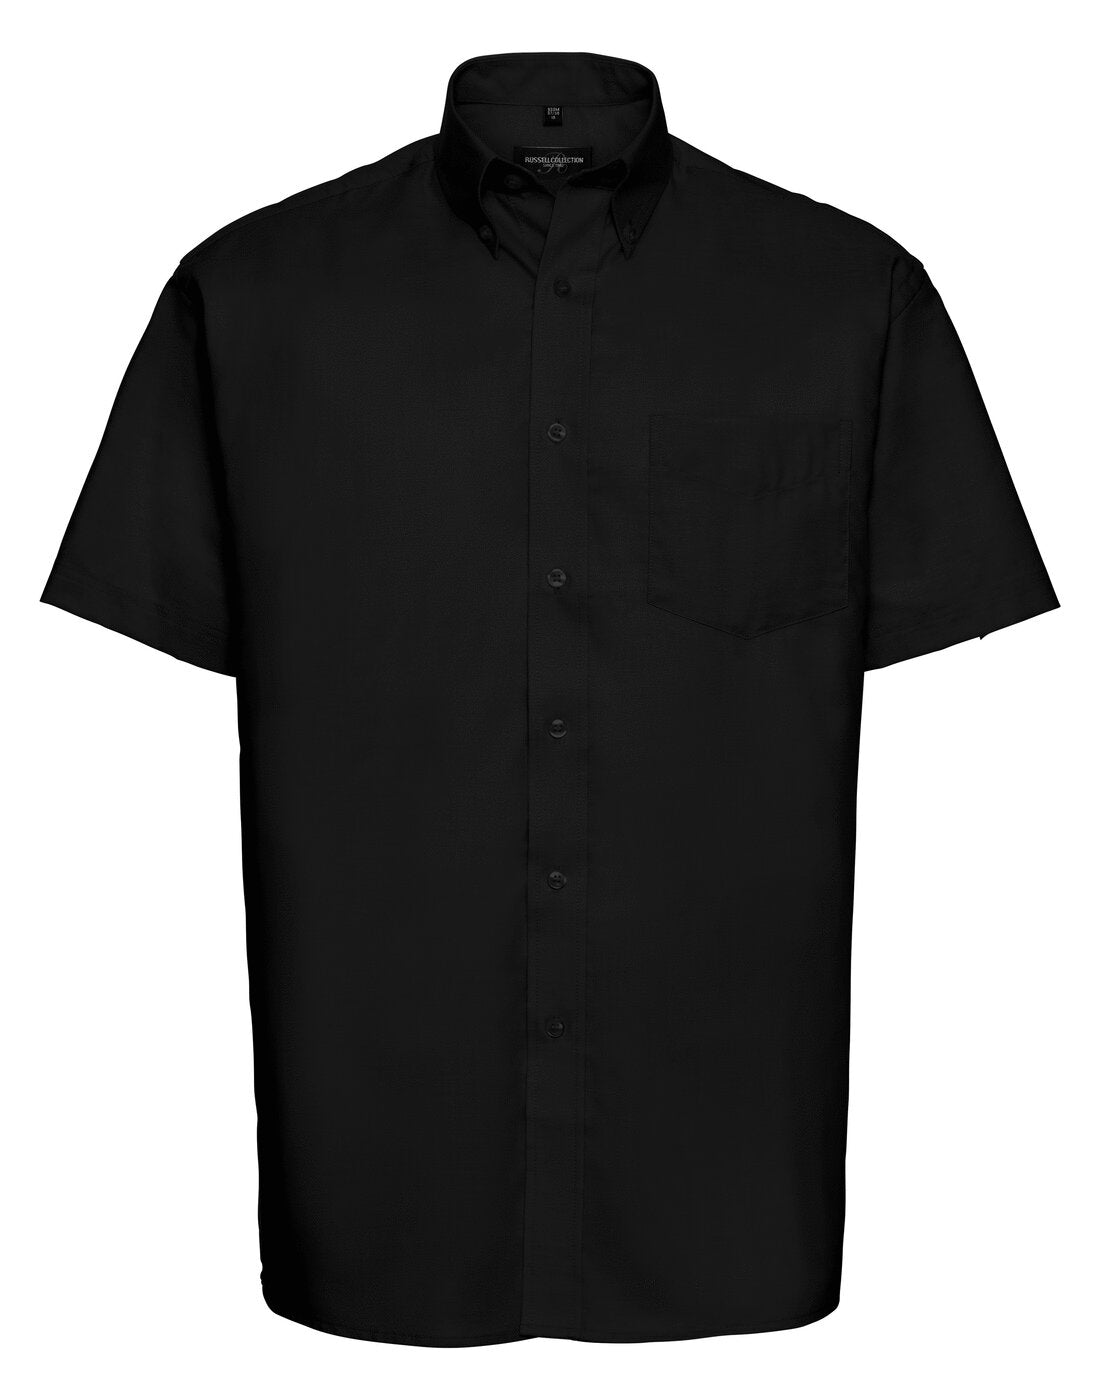 Russell Mens Short Sleeve Oxford Shirt Black